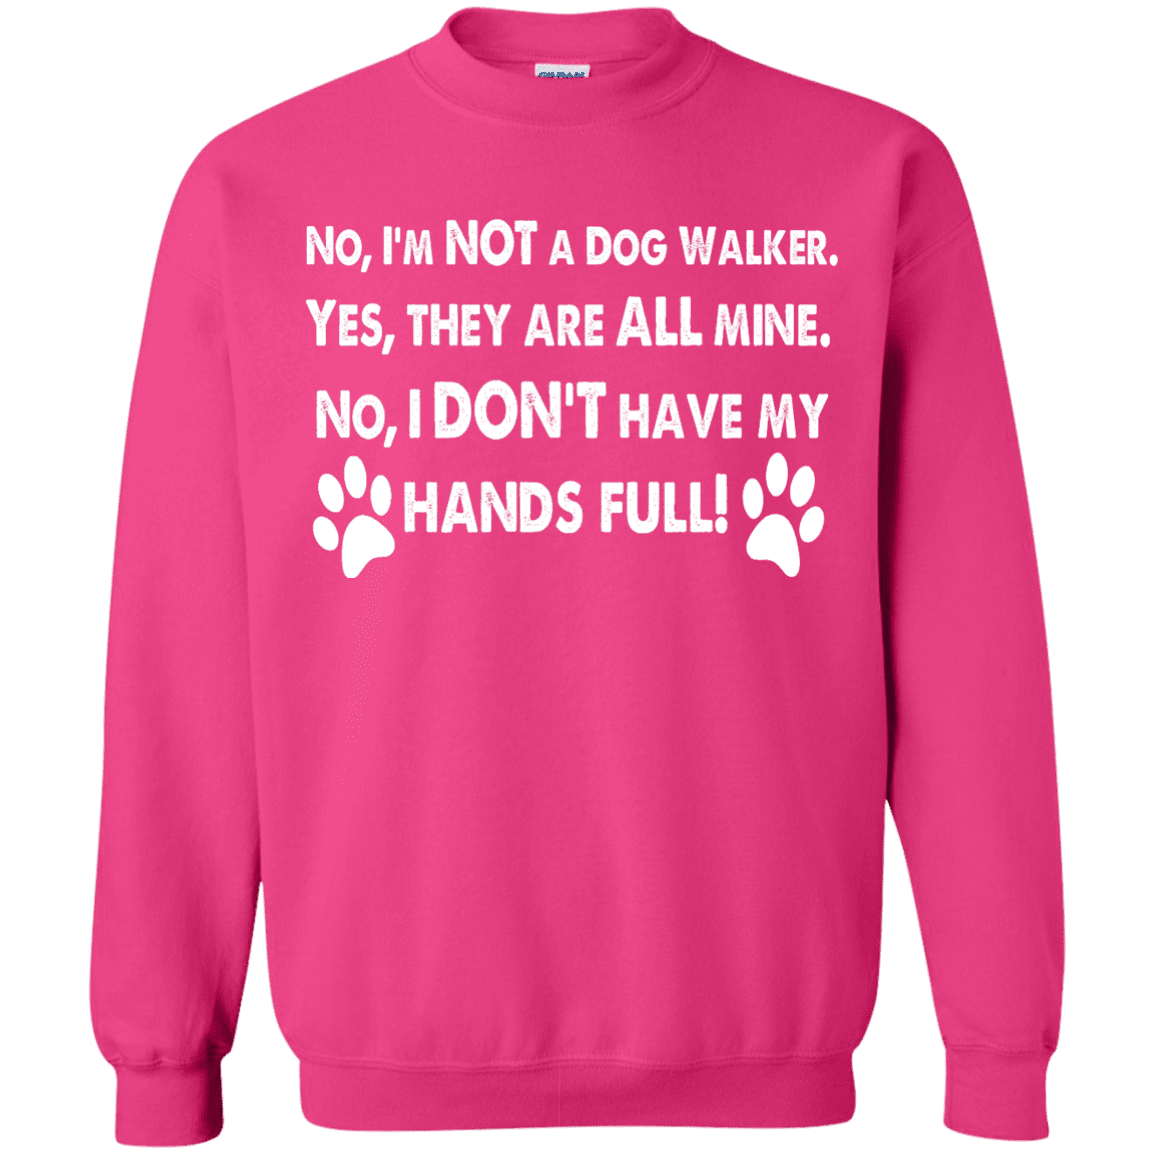 Not A Dog Walker - Sweatshirt.